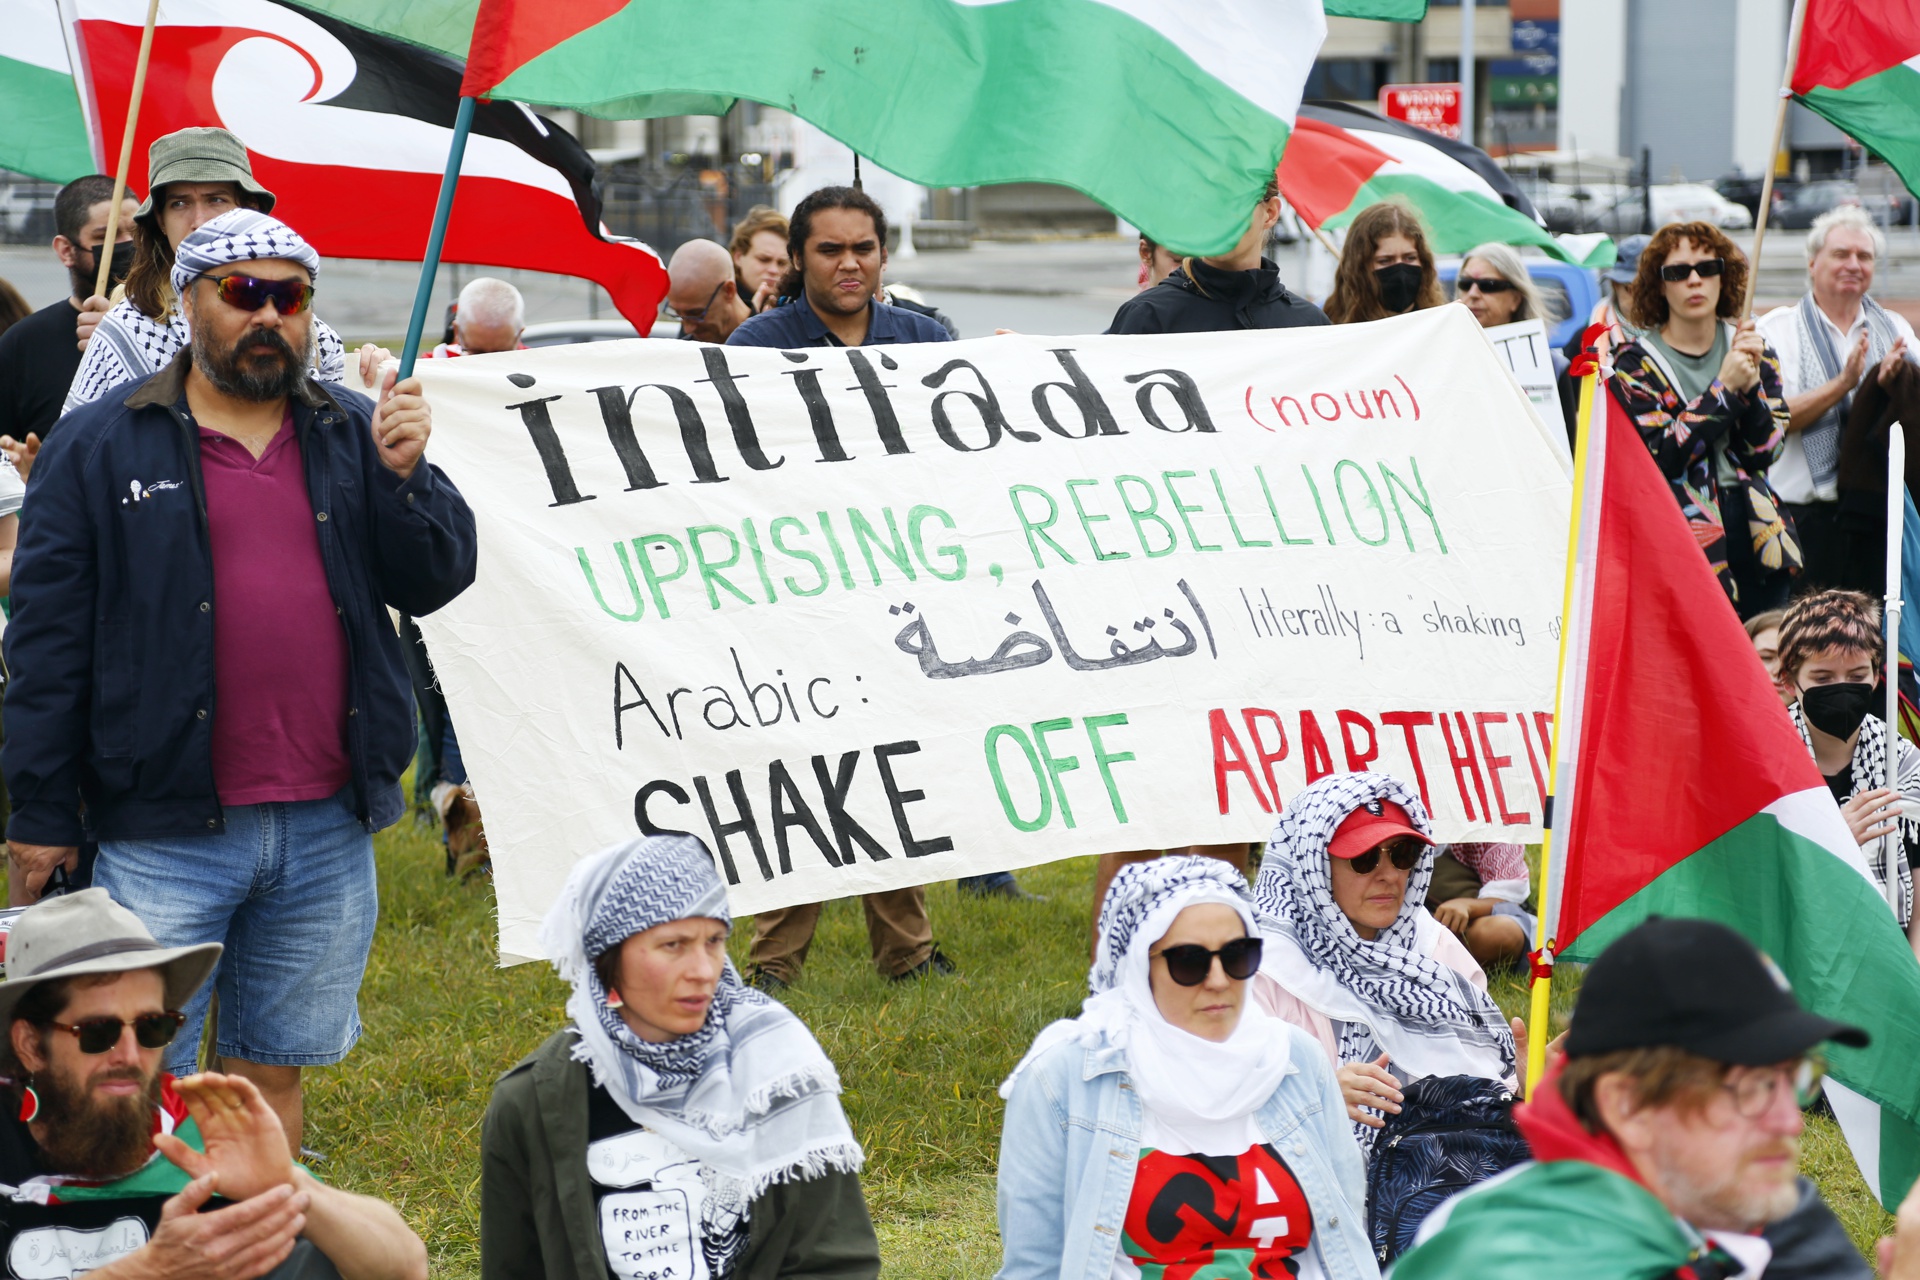 Intifada is union business, Port of Brisbane, May 25